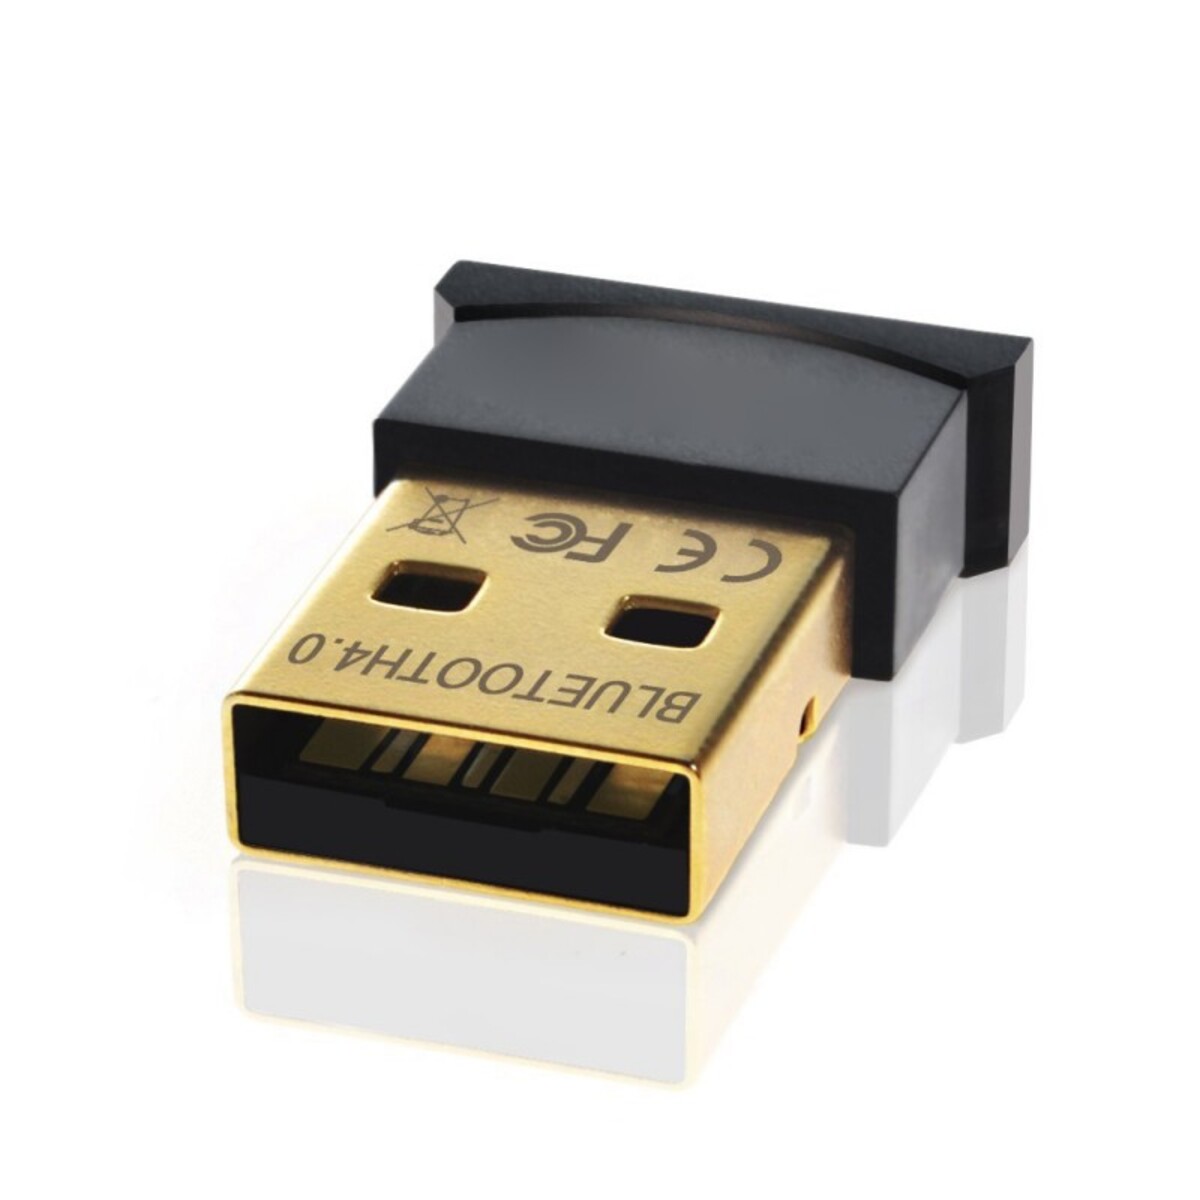 Trands Ultra Mini Bluetooth CSR 4.0 USB High Speed Dongle Adapter